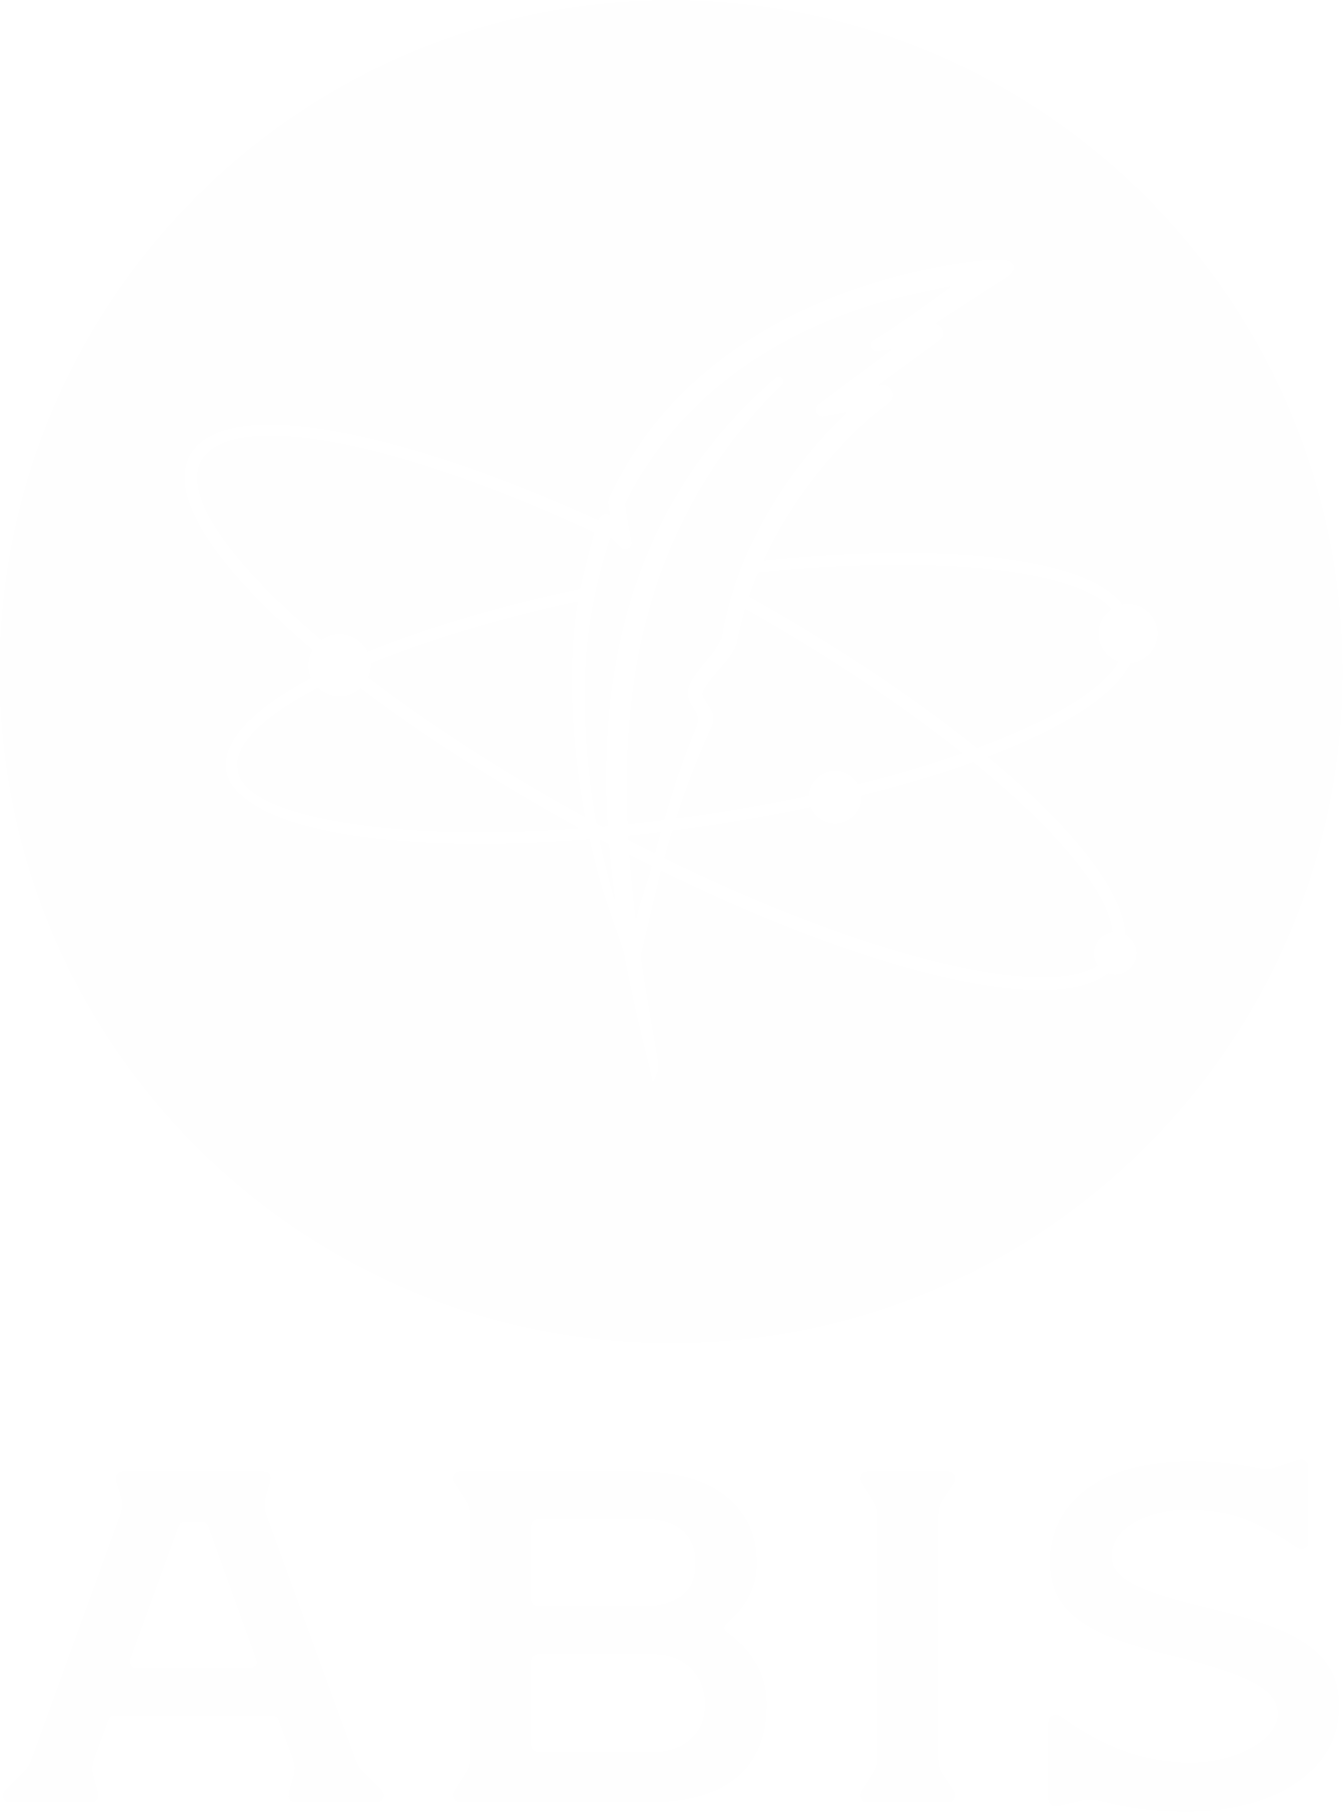 ABIS Education